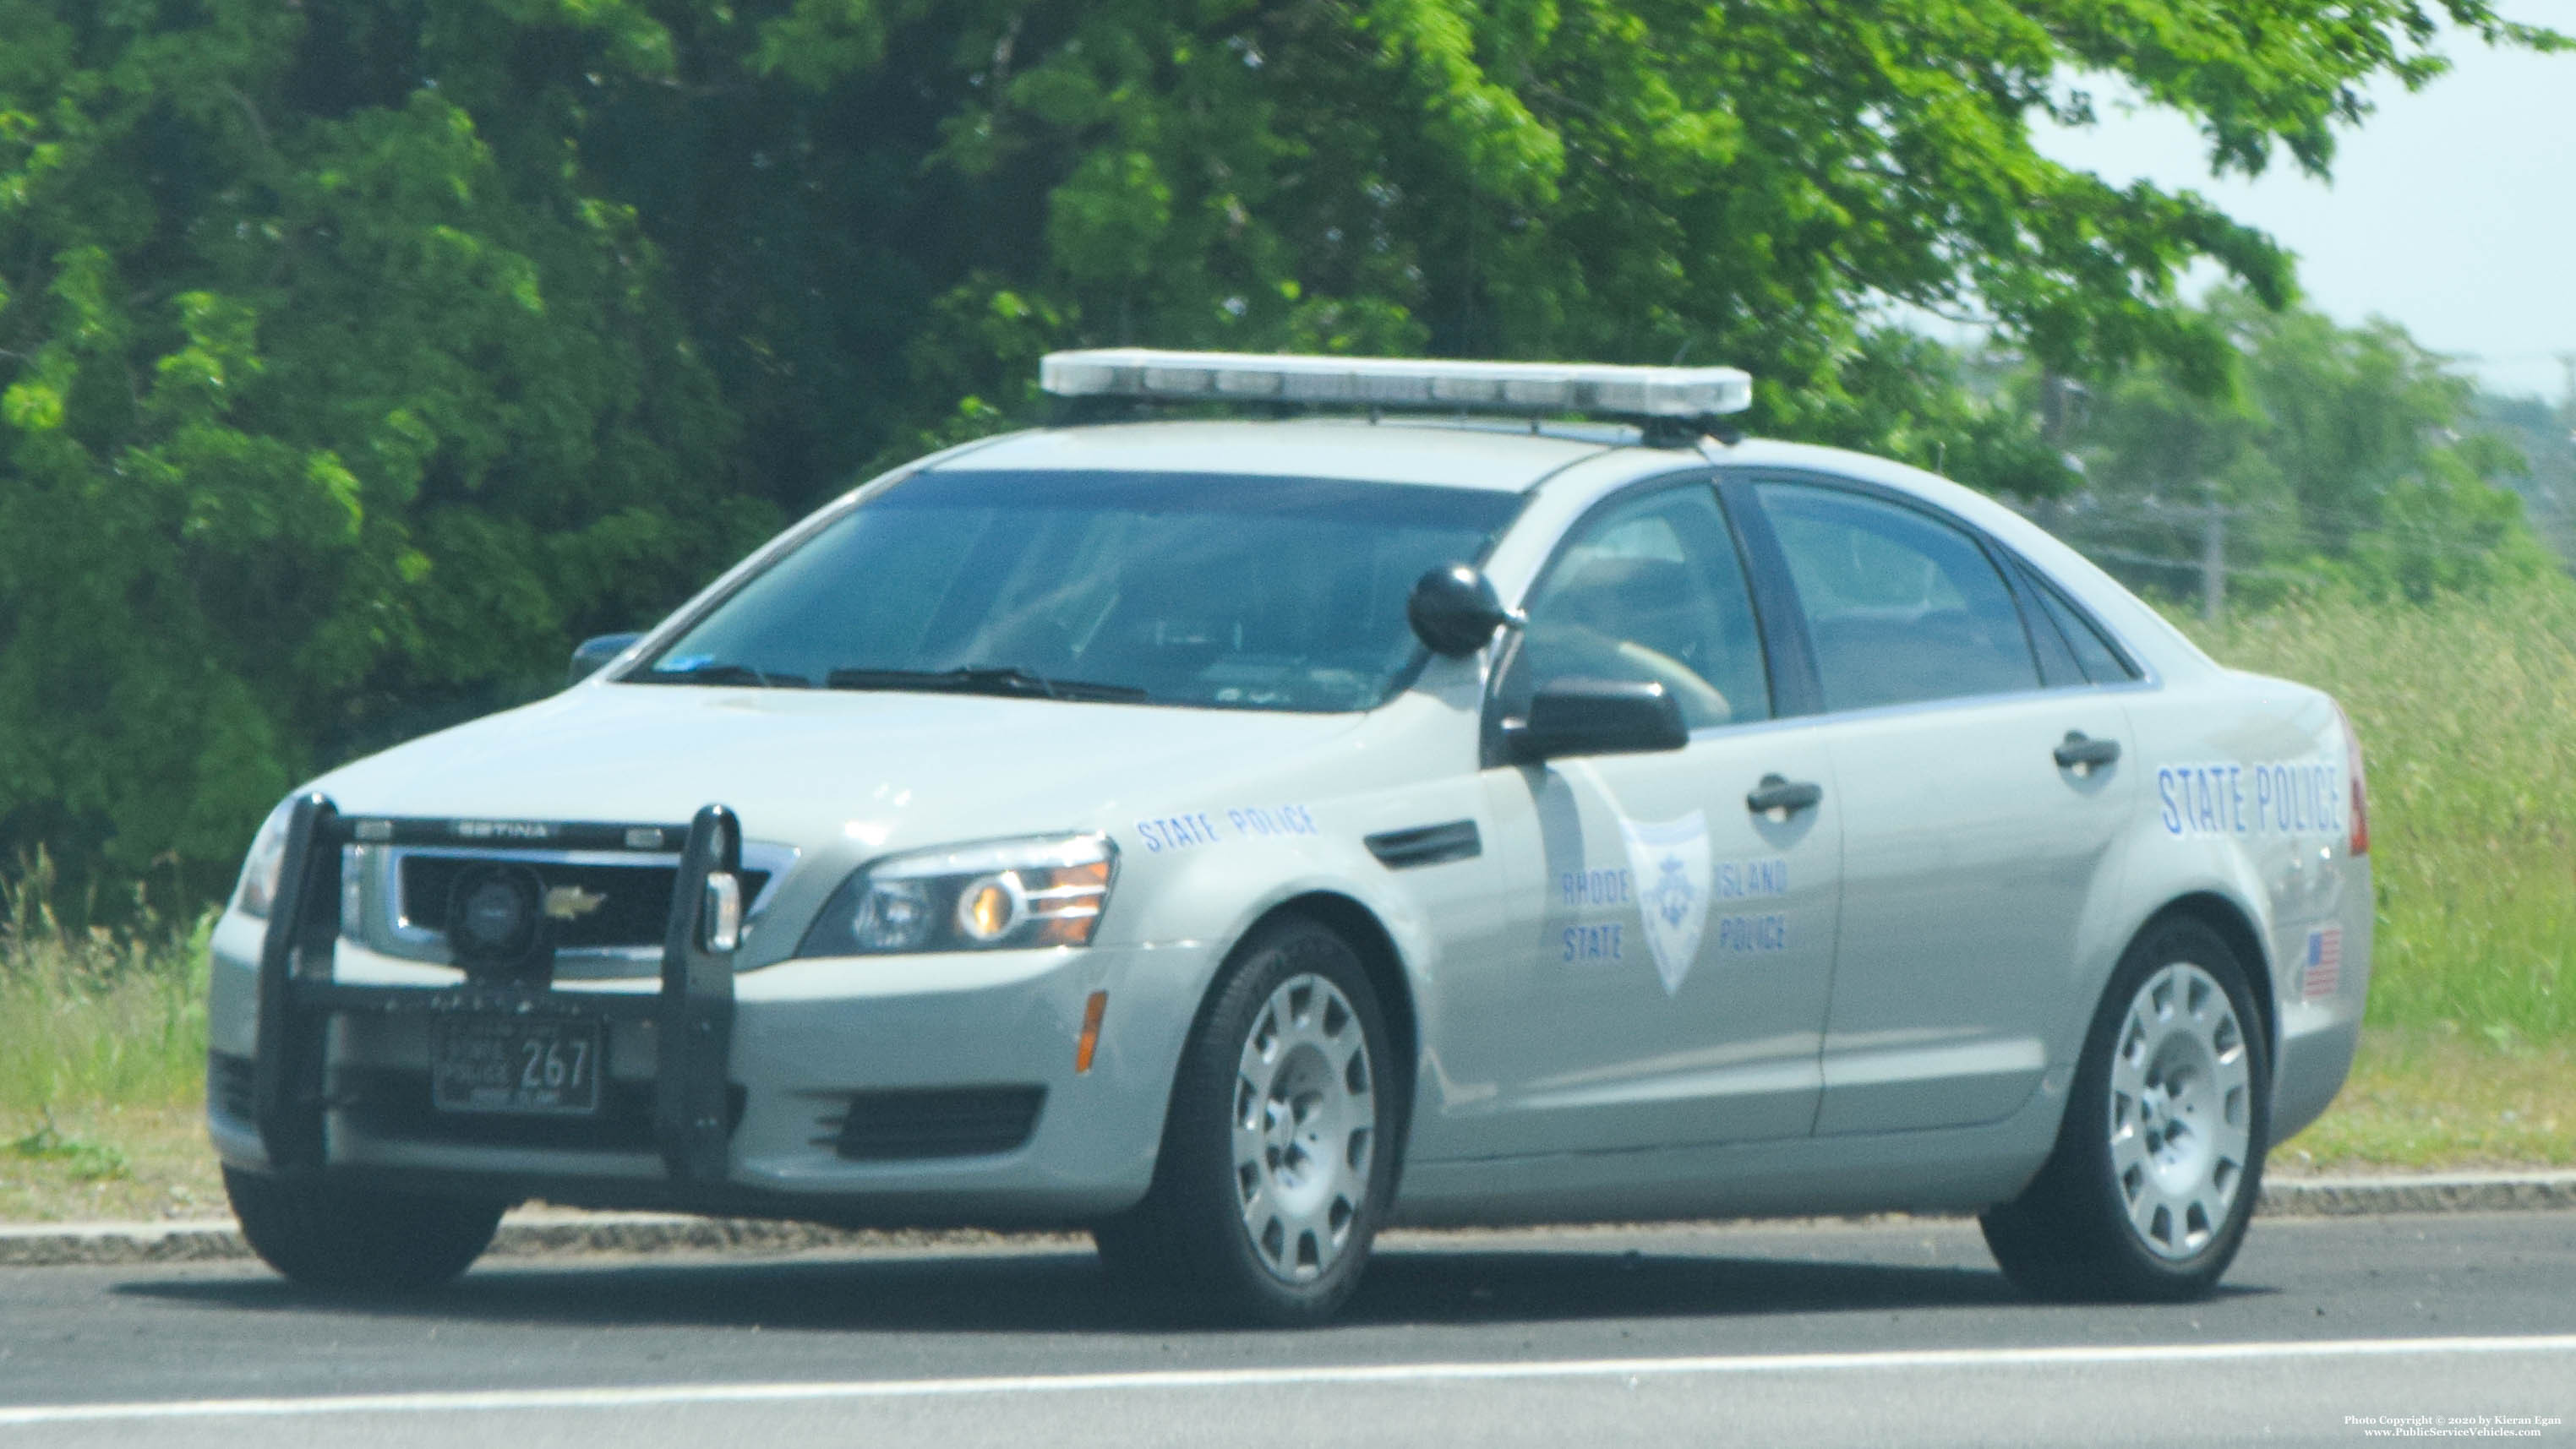 A photo  of Rhode Island State Police
            Cruiser 267, a 2013 Chevrolet Caprice             taken by Kieran Egan